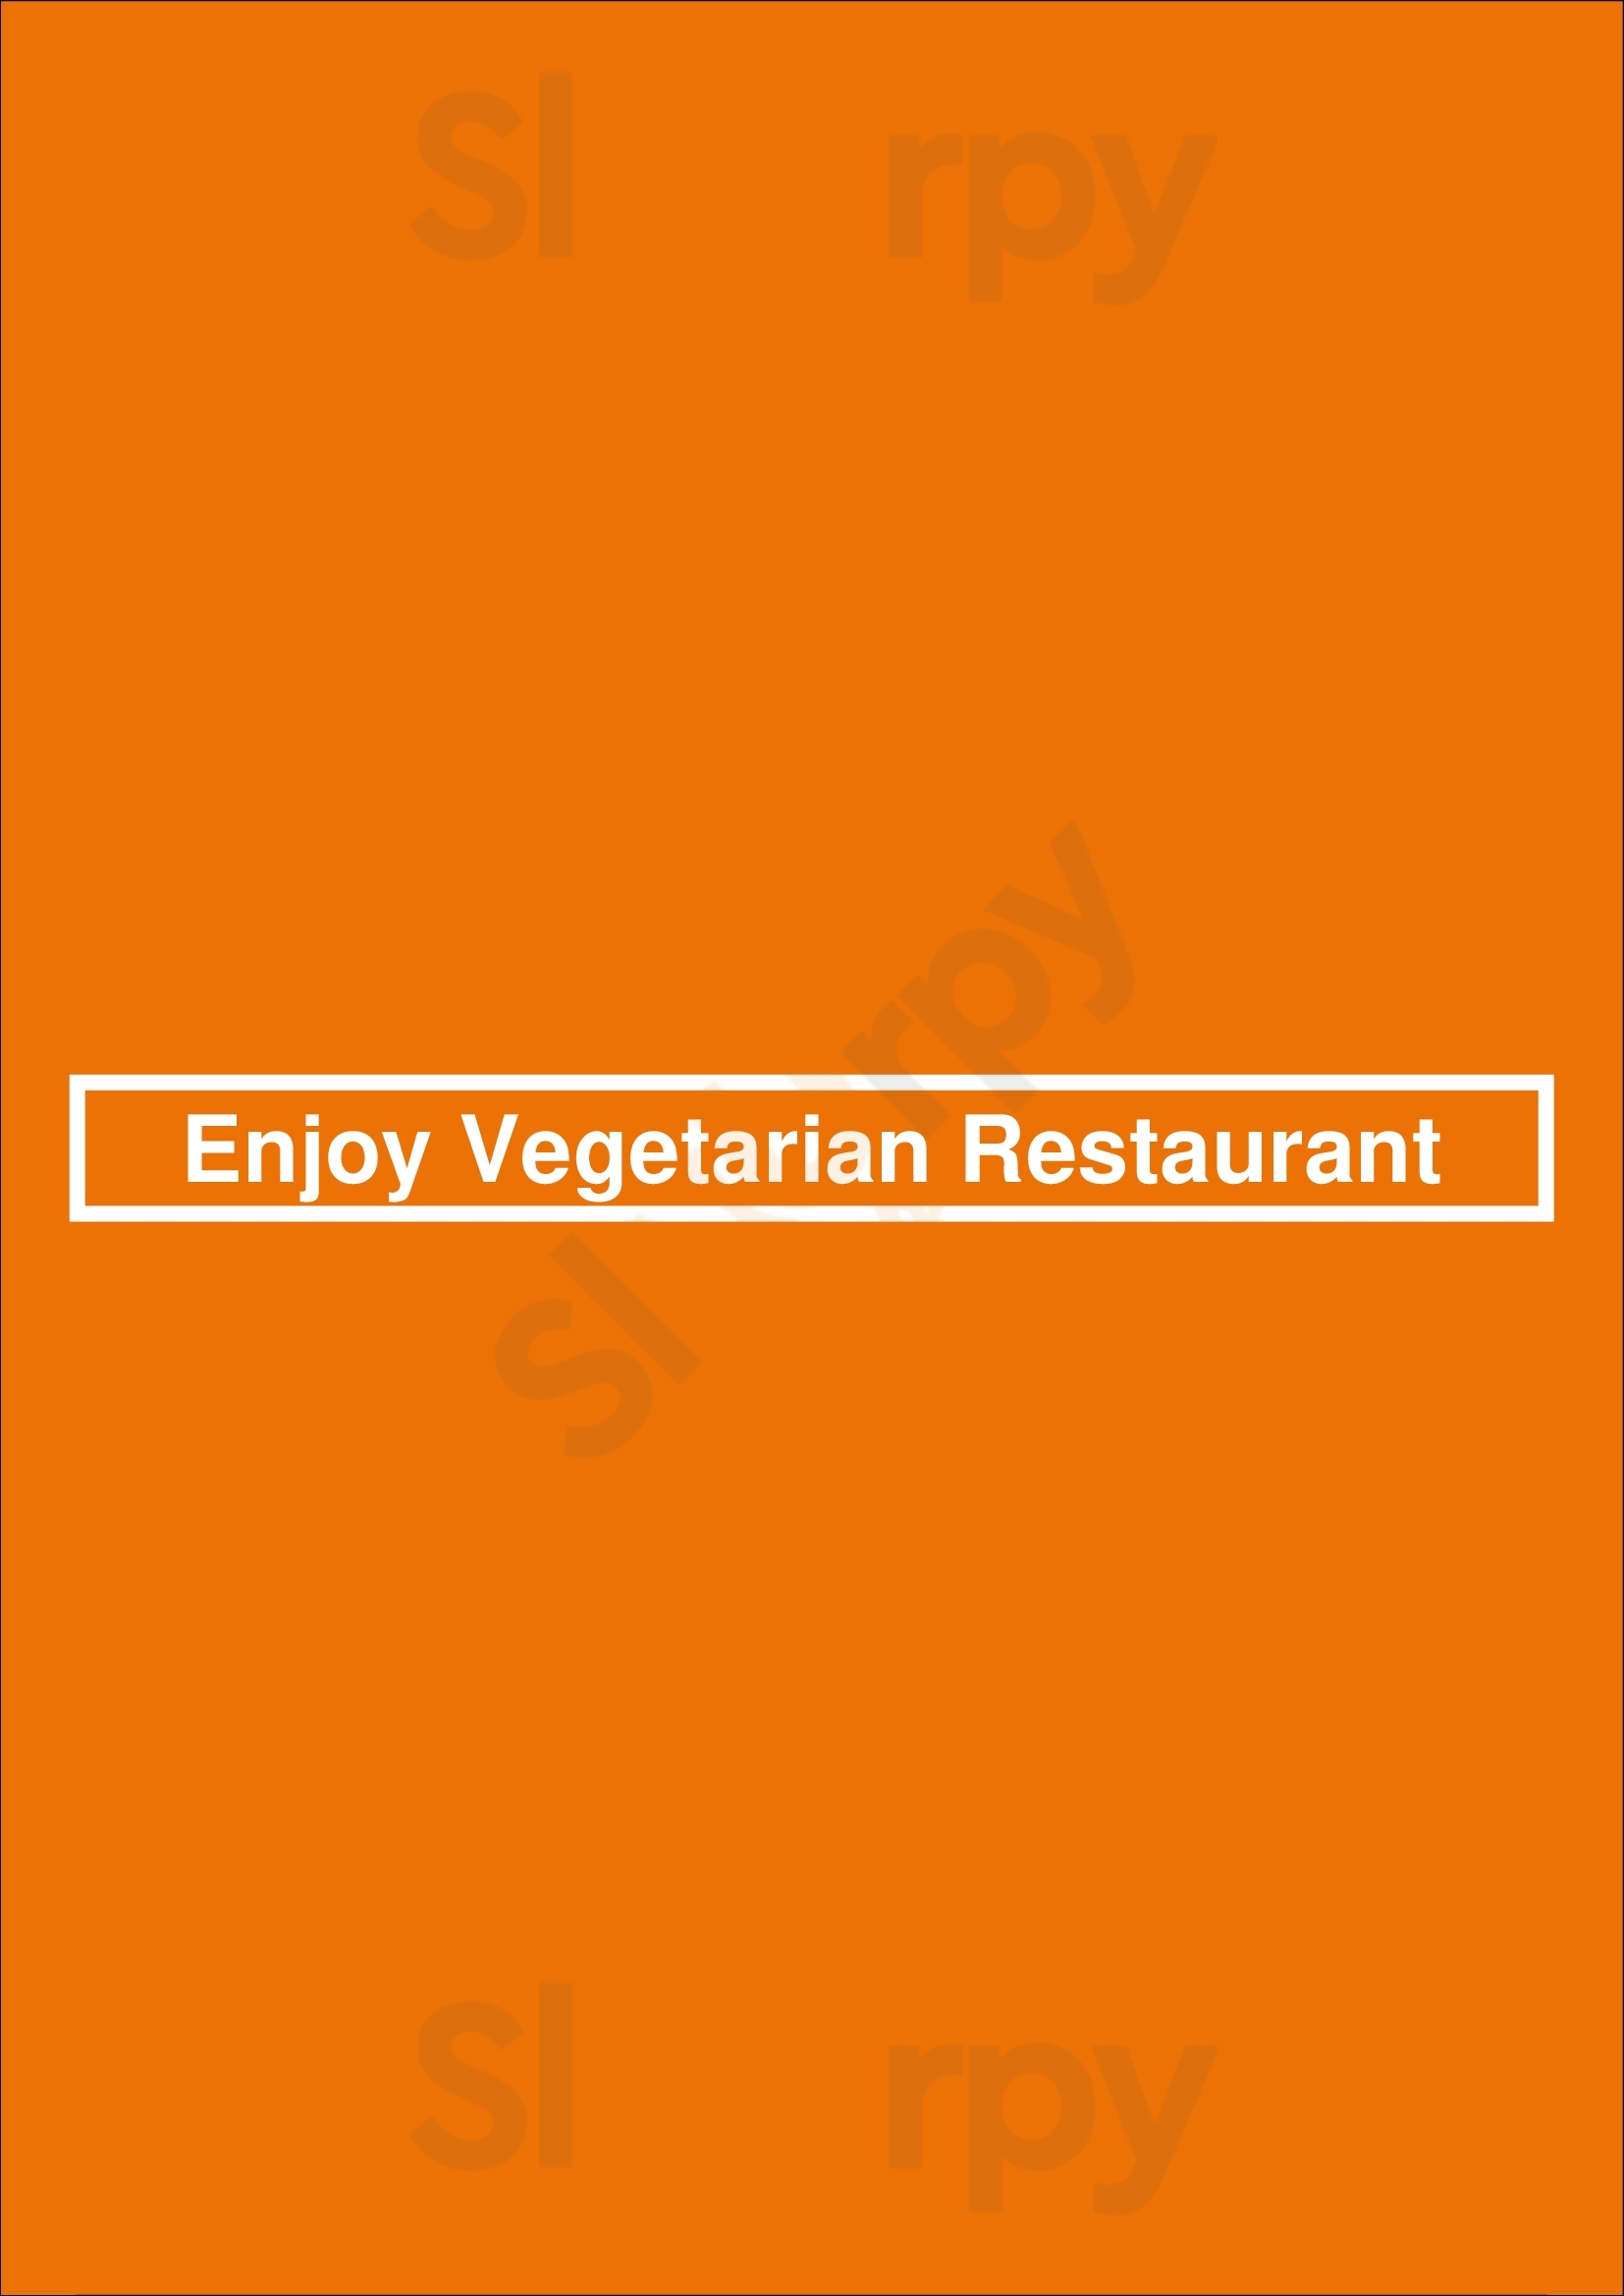 Enjoy Vegetarian Restaurant San Francisco Menu - 1